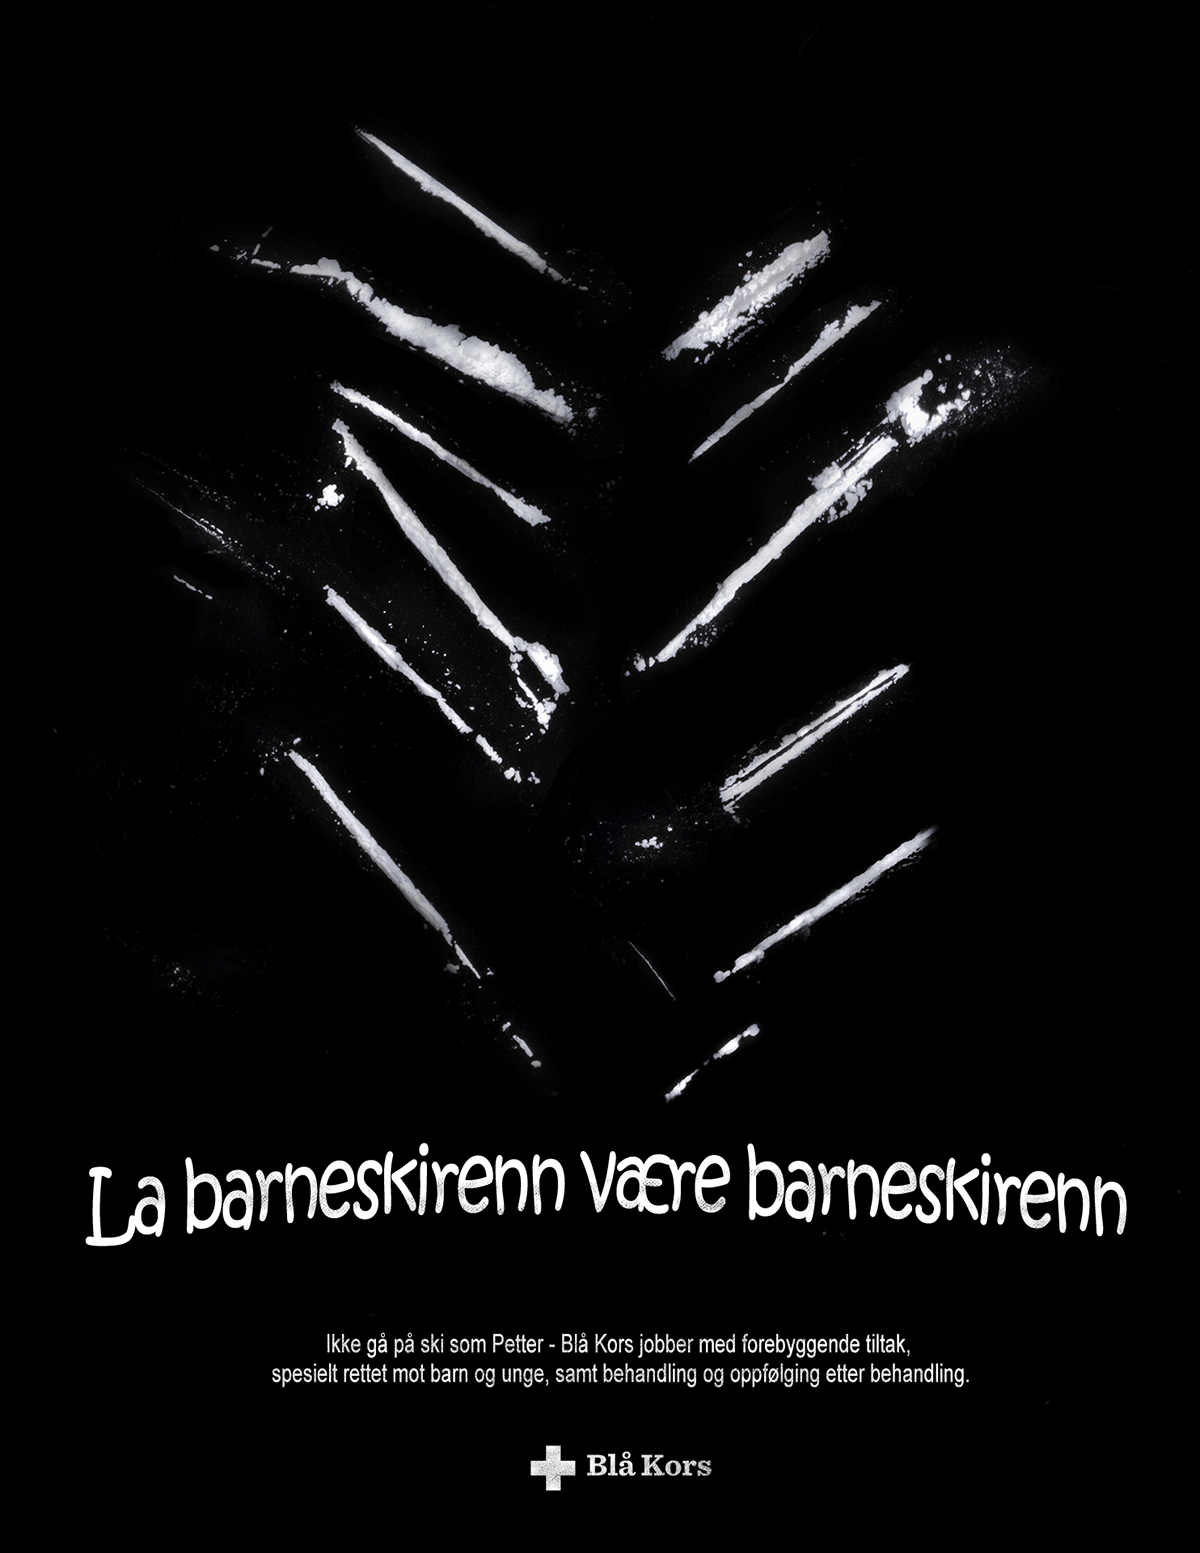 Gard Wanderoy petter northug ads adshel advertisement Advertising  poster posterdesign Westerdals Oslo ACT